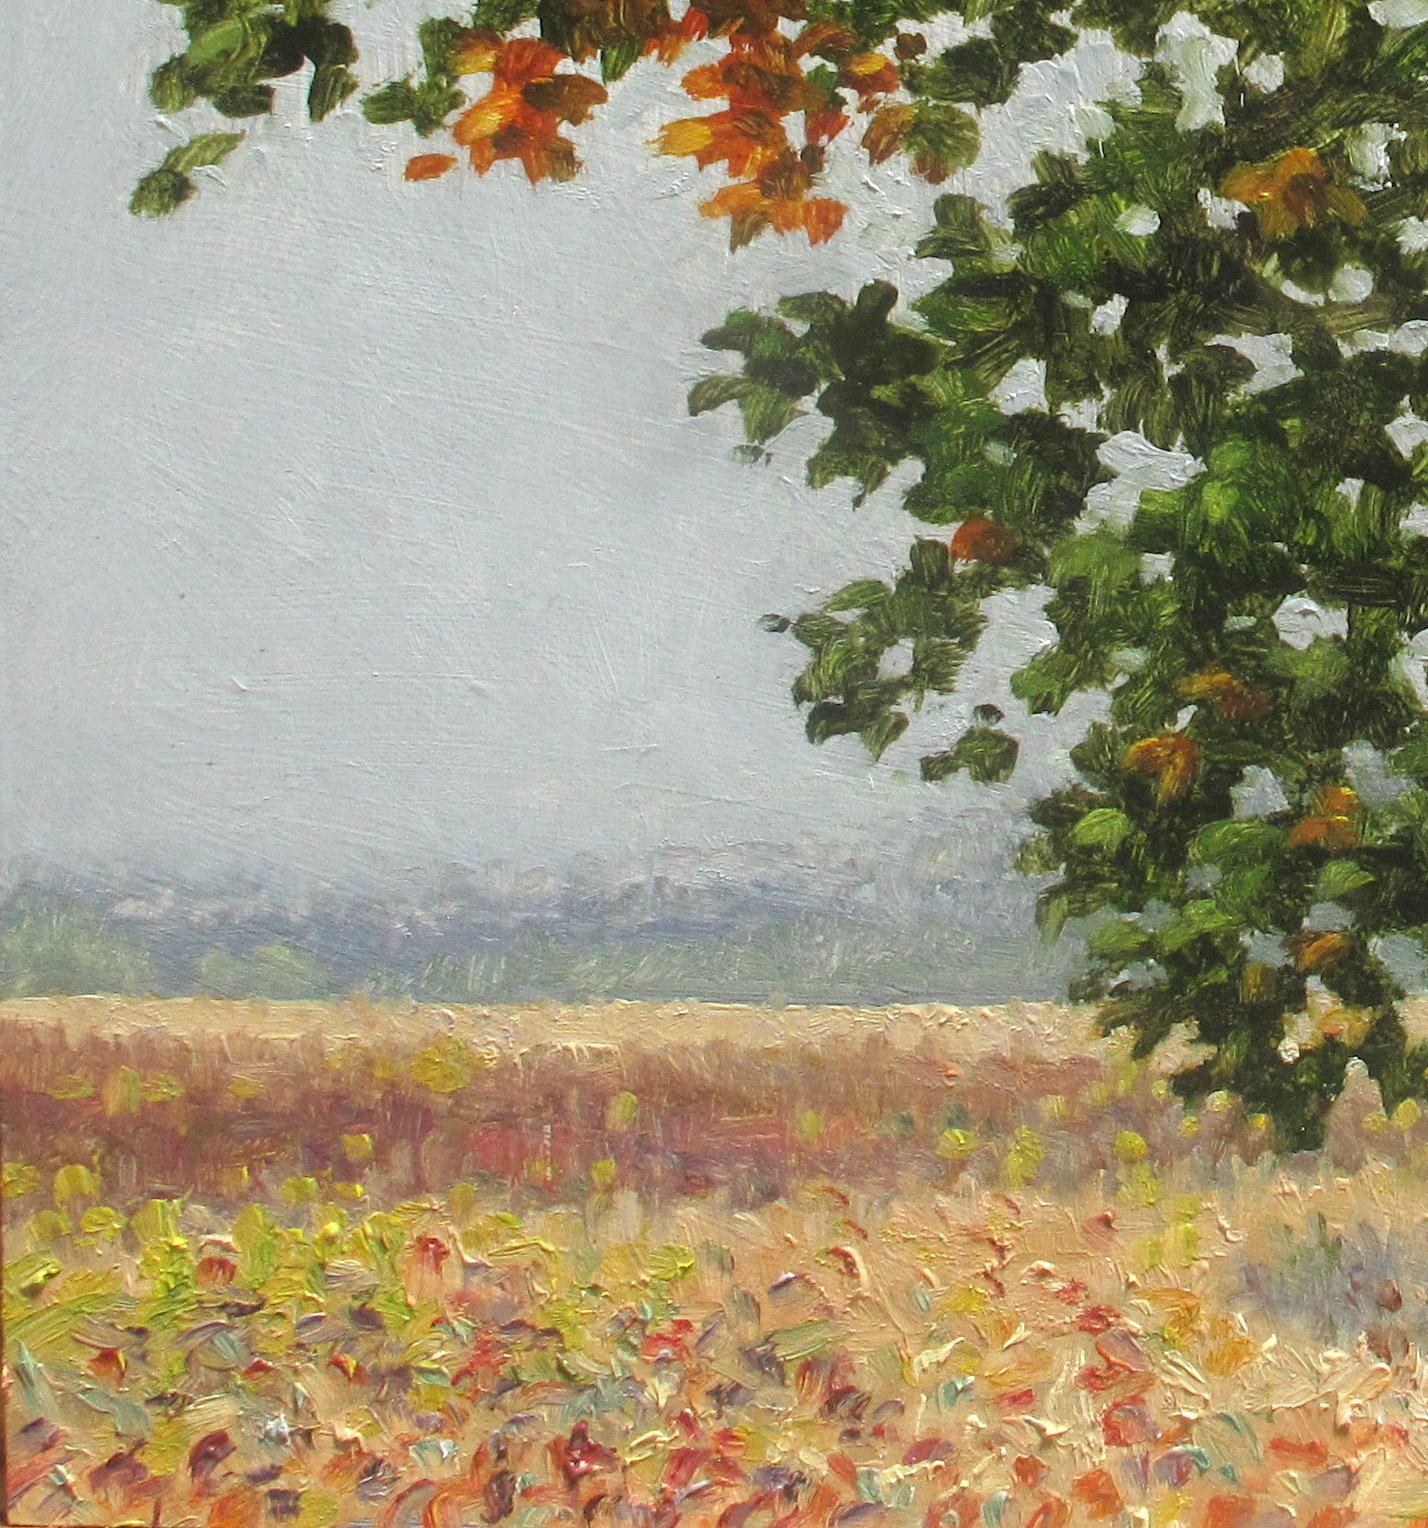 Field Painting September 22 2020, Botanical, Green Tree, Golden Grass, Autumn For Sale 3